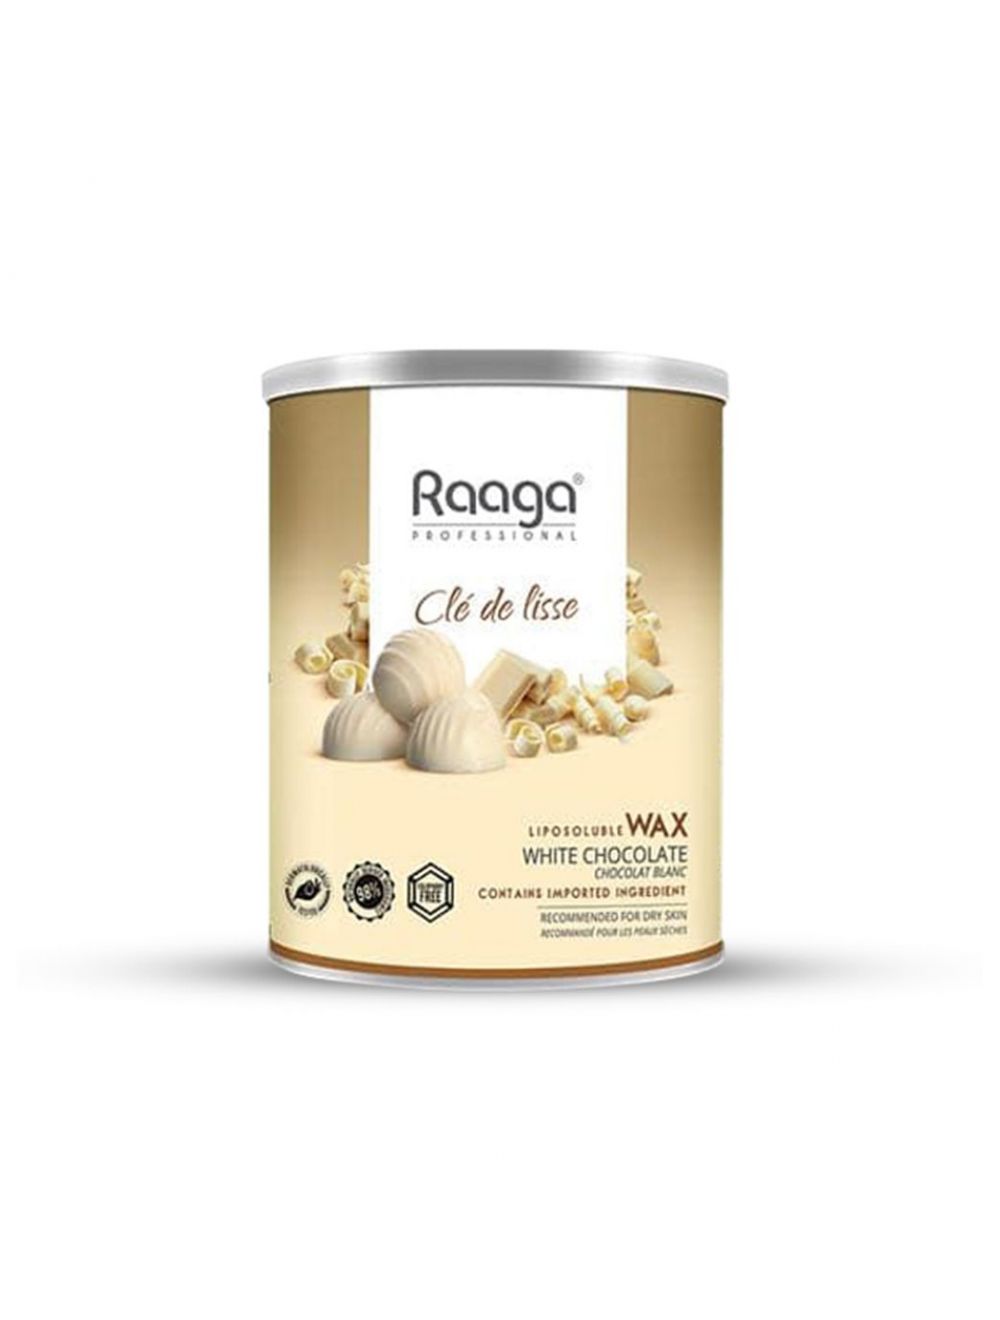 Raaga Professional White Chocolate Liposoluble Wax (800gm)